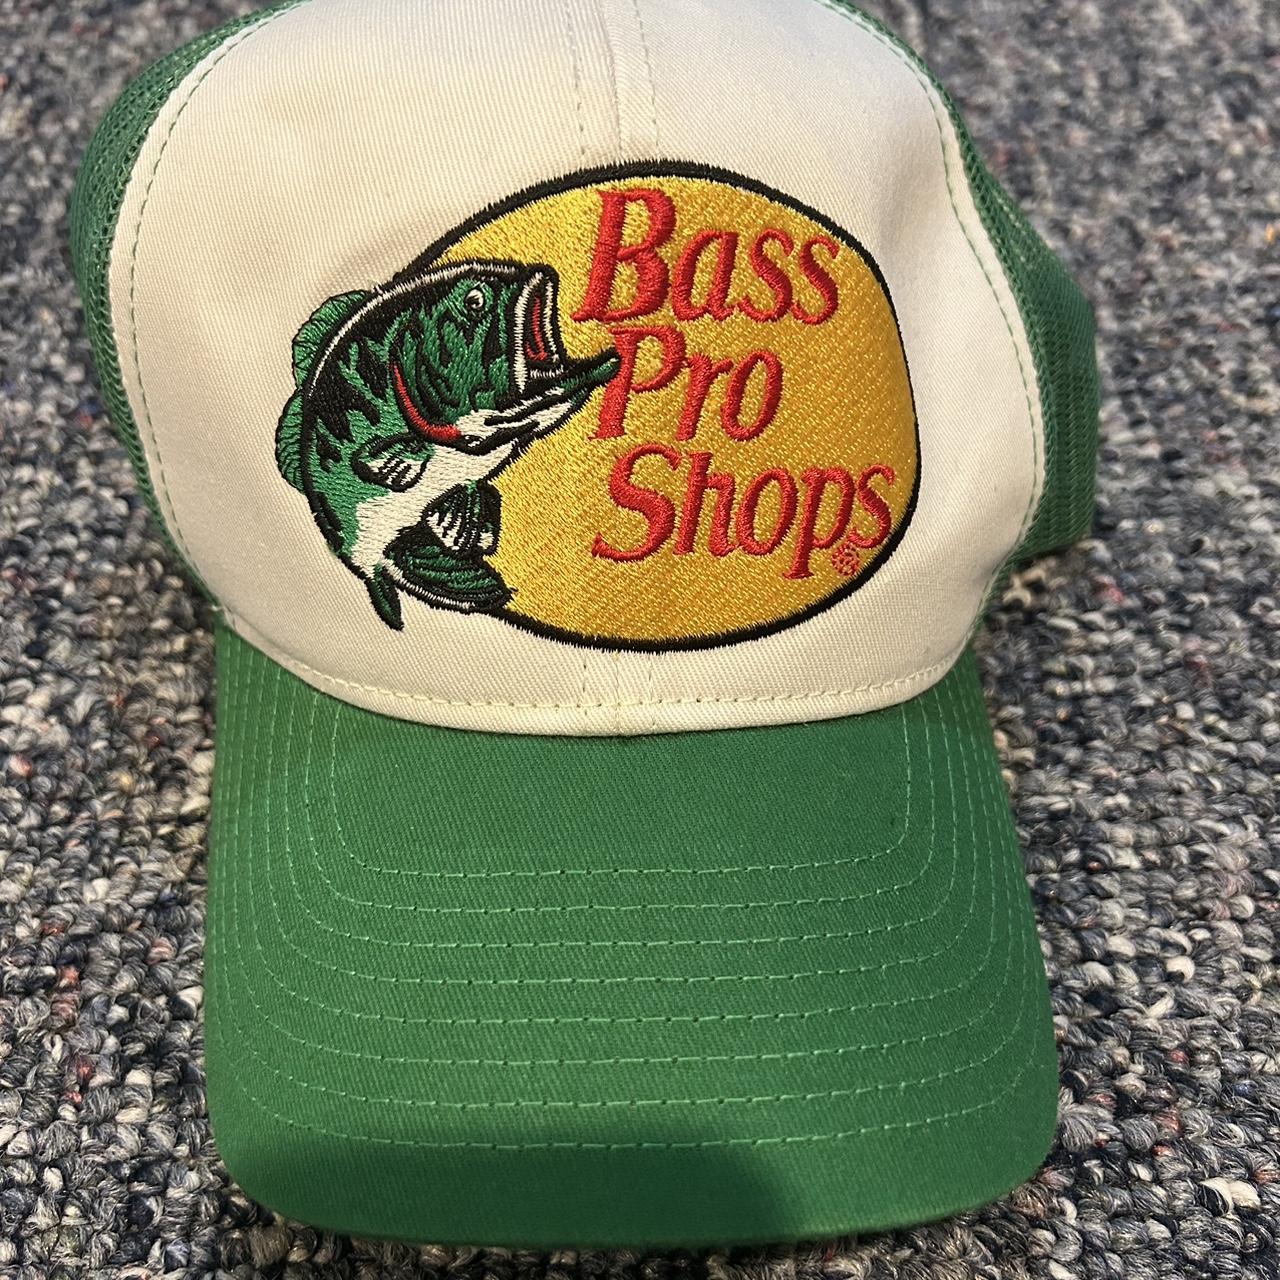 bass pro shop hat - Depop